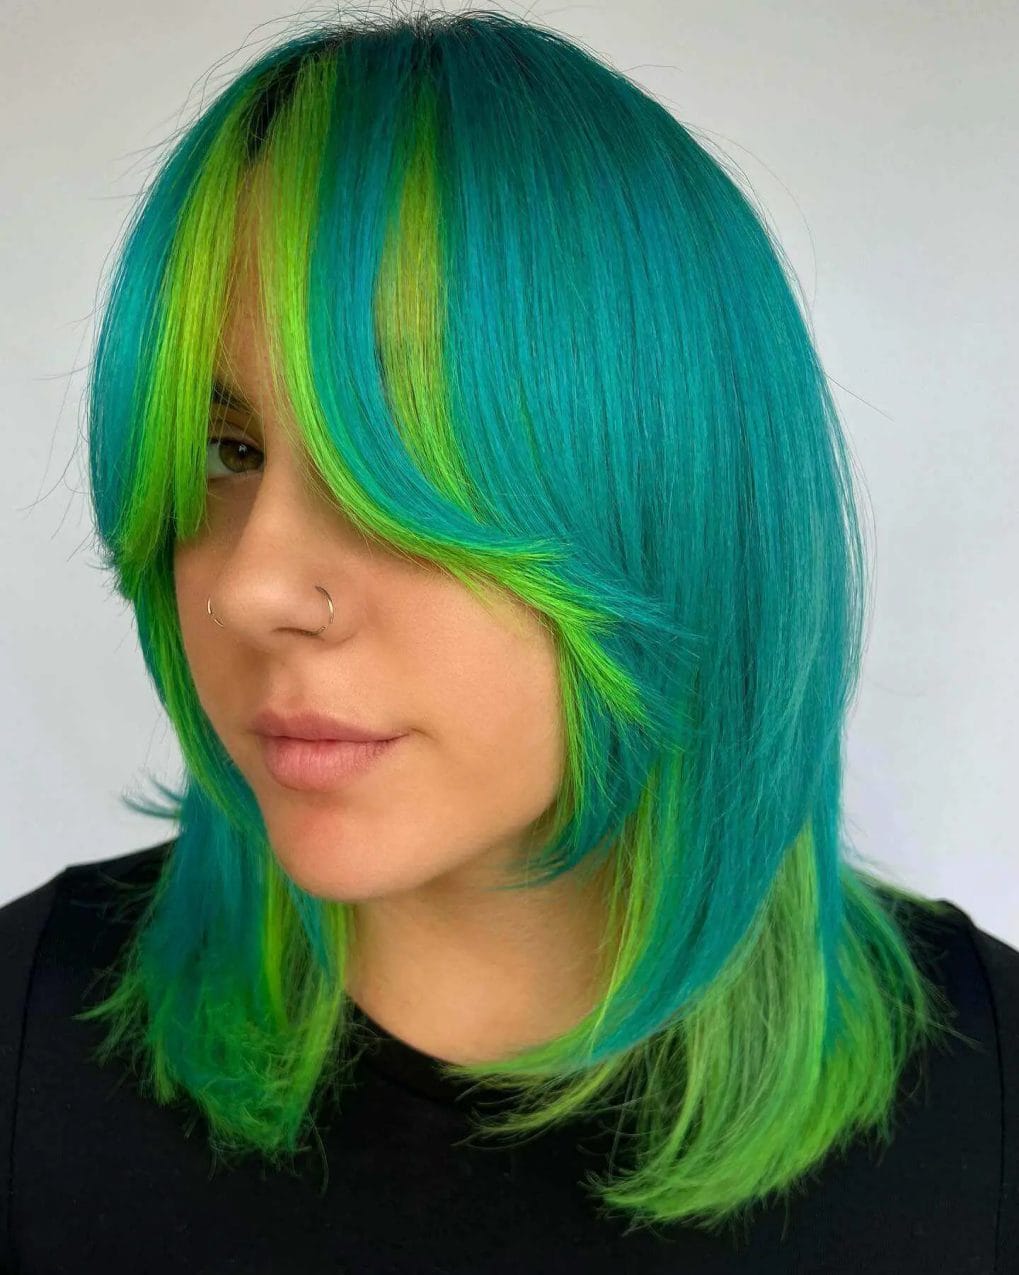 Dynamic vertigo neon blue and adrenaline neon green shoulder-length blend.